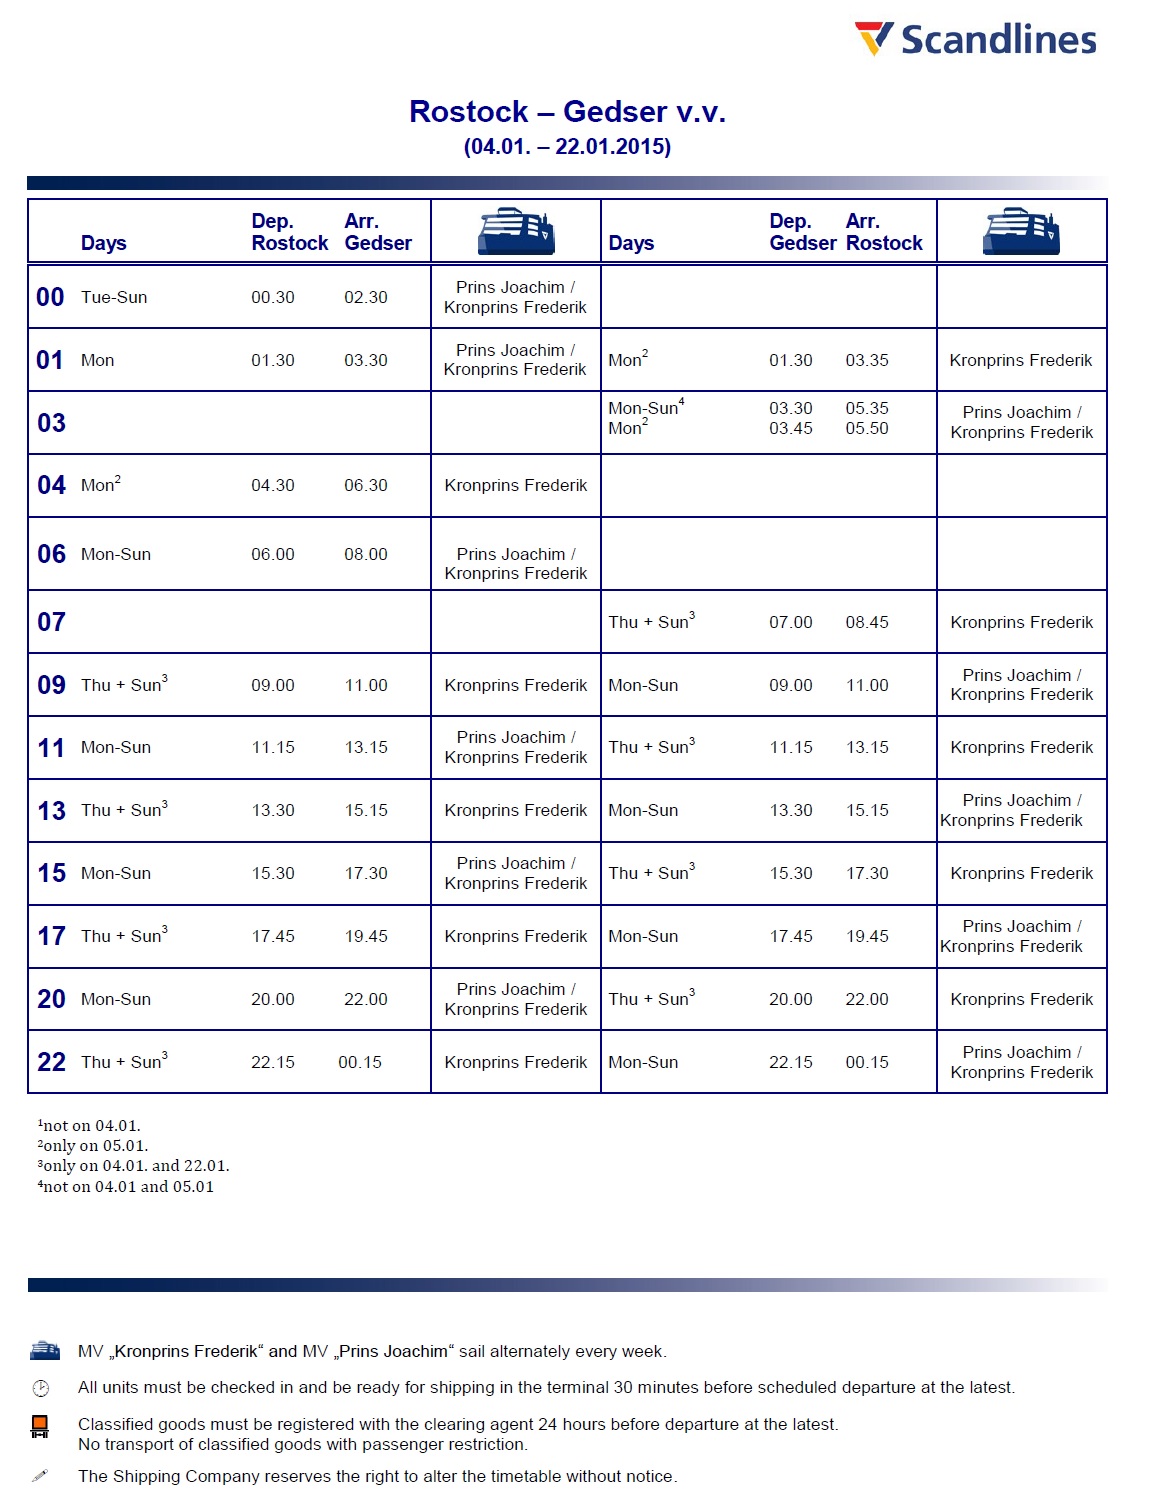 Rostock - Gedser timetable